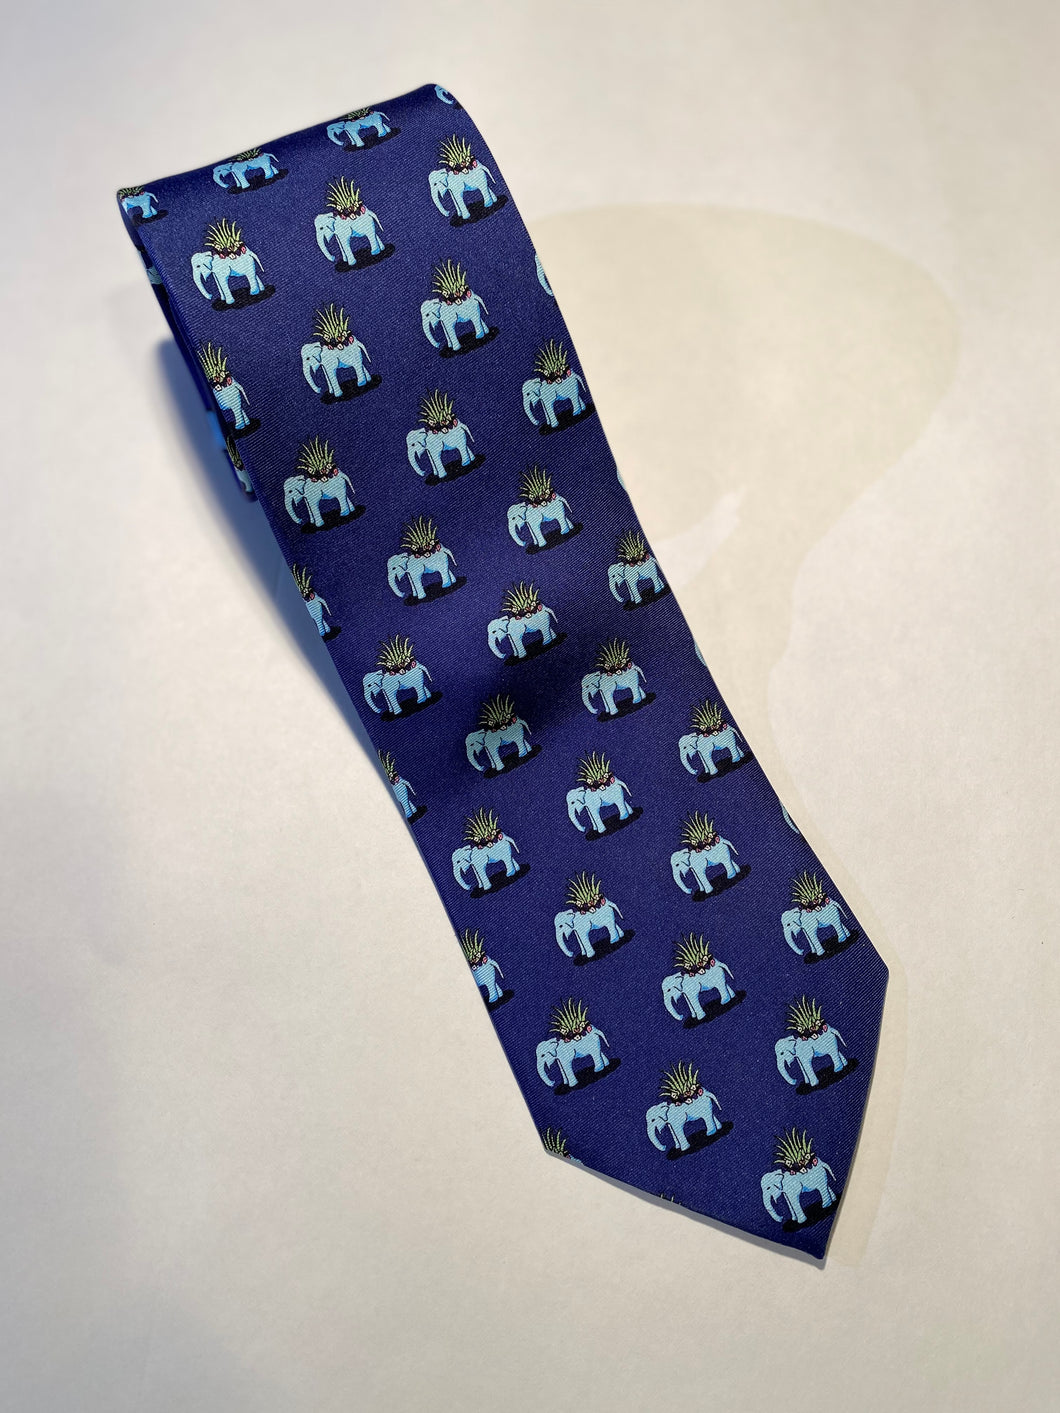 LYC Summer Elephant Neck Tie